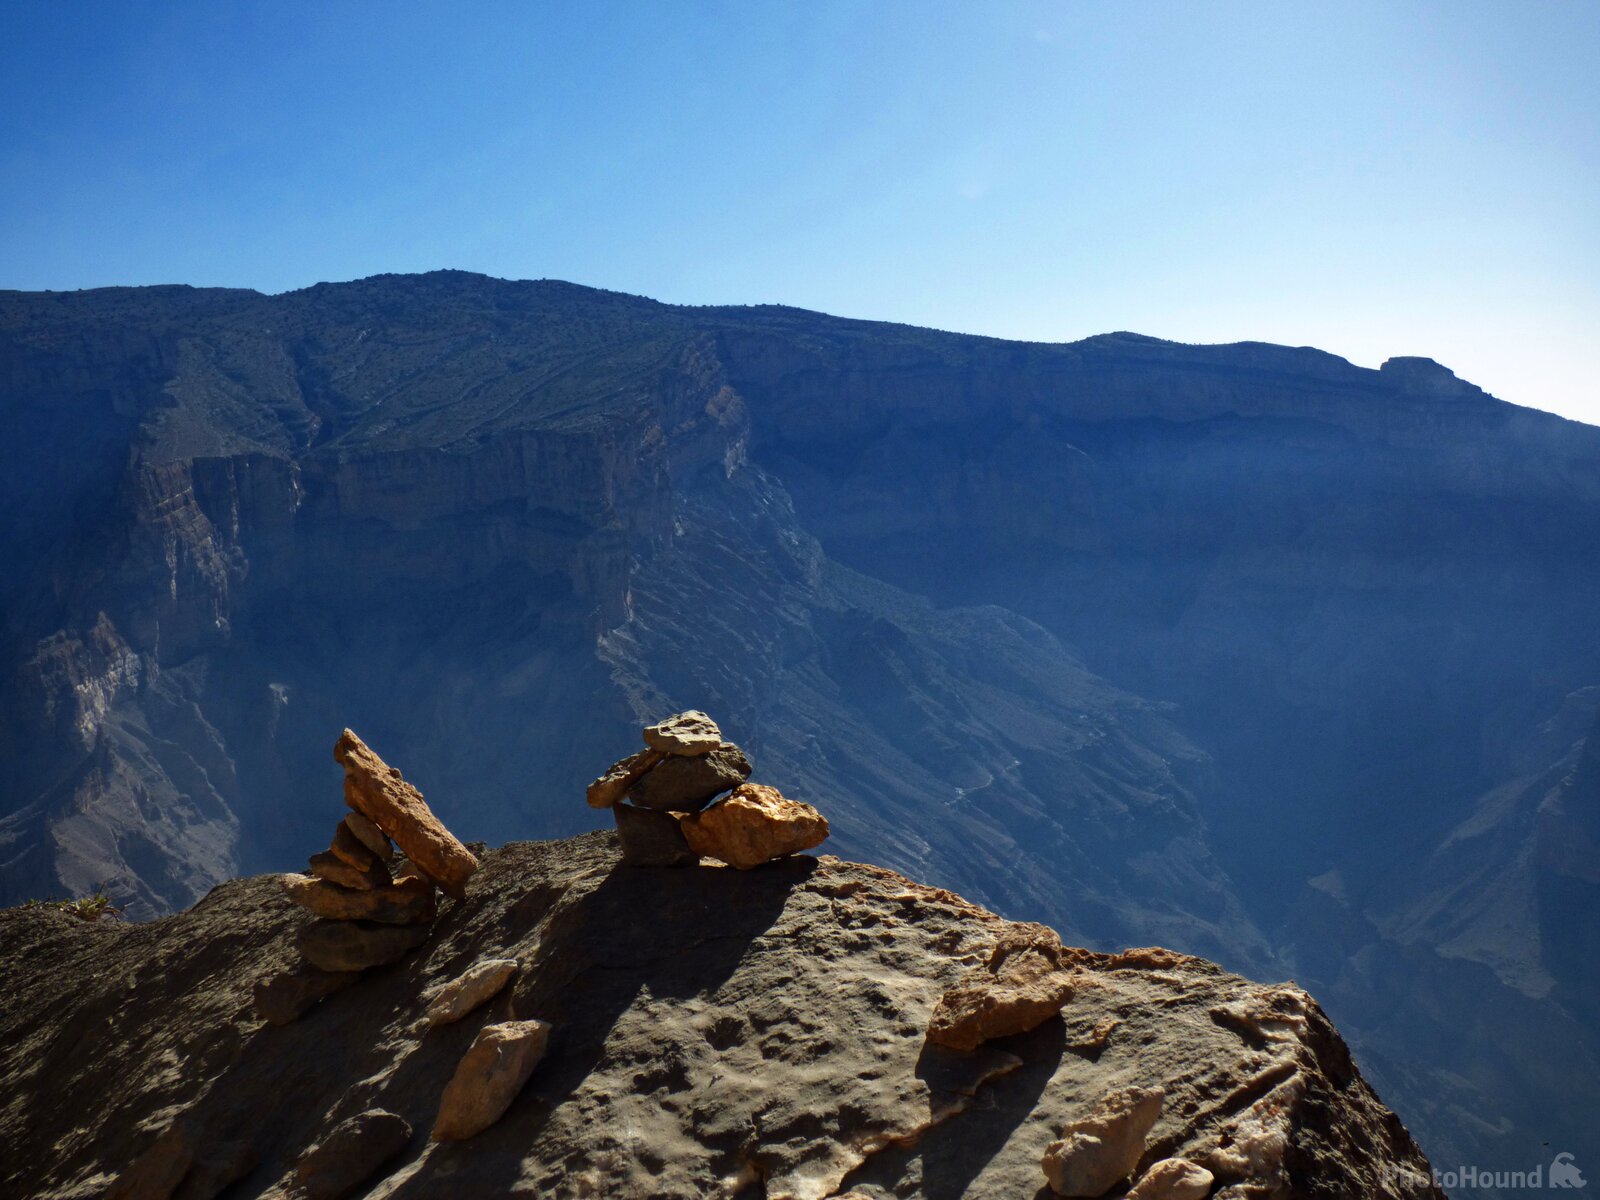 Image of Jebel Shams Viewpoint by Alexandra Sharrock